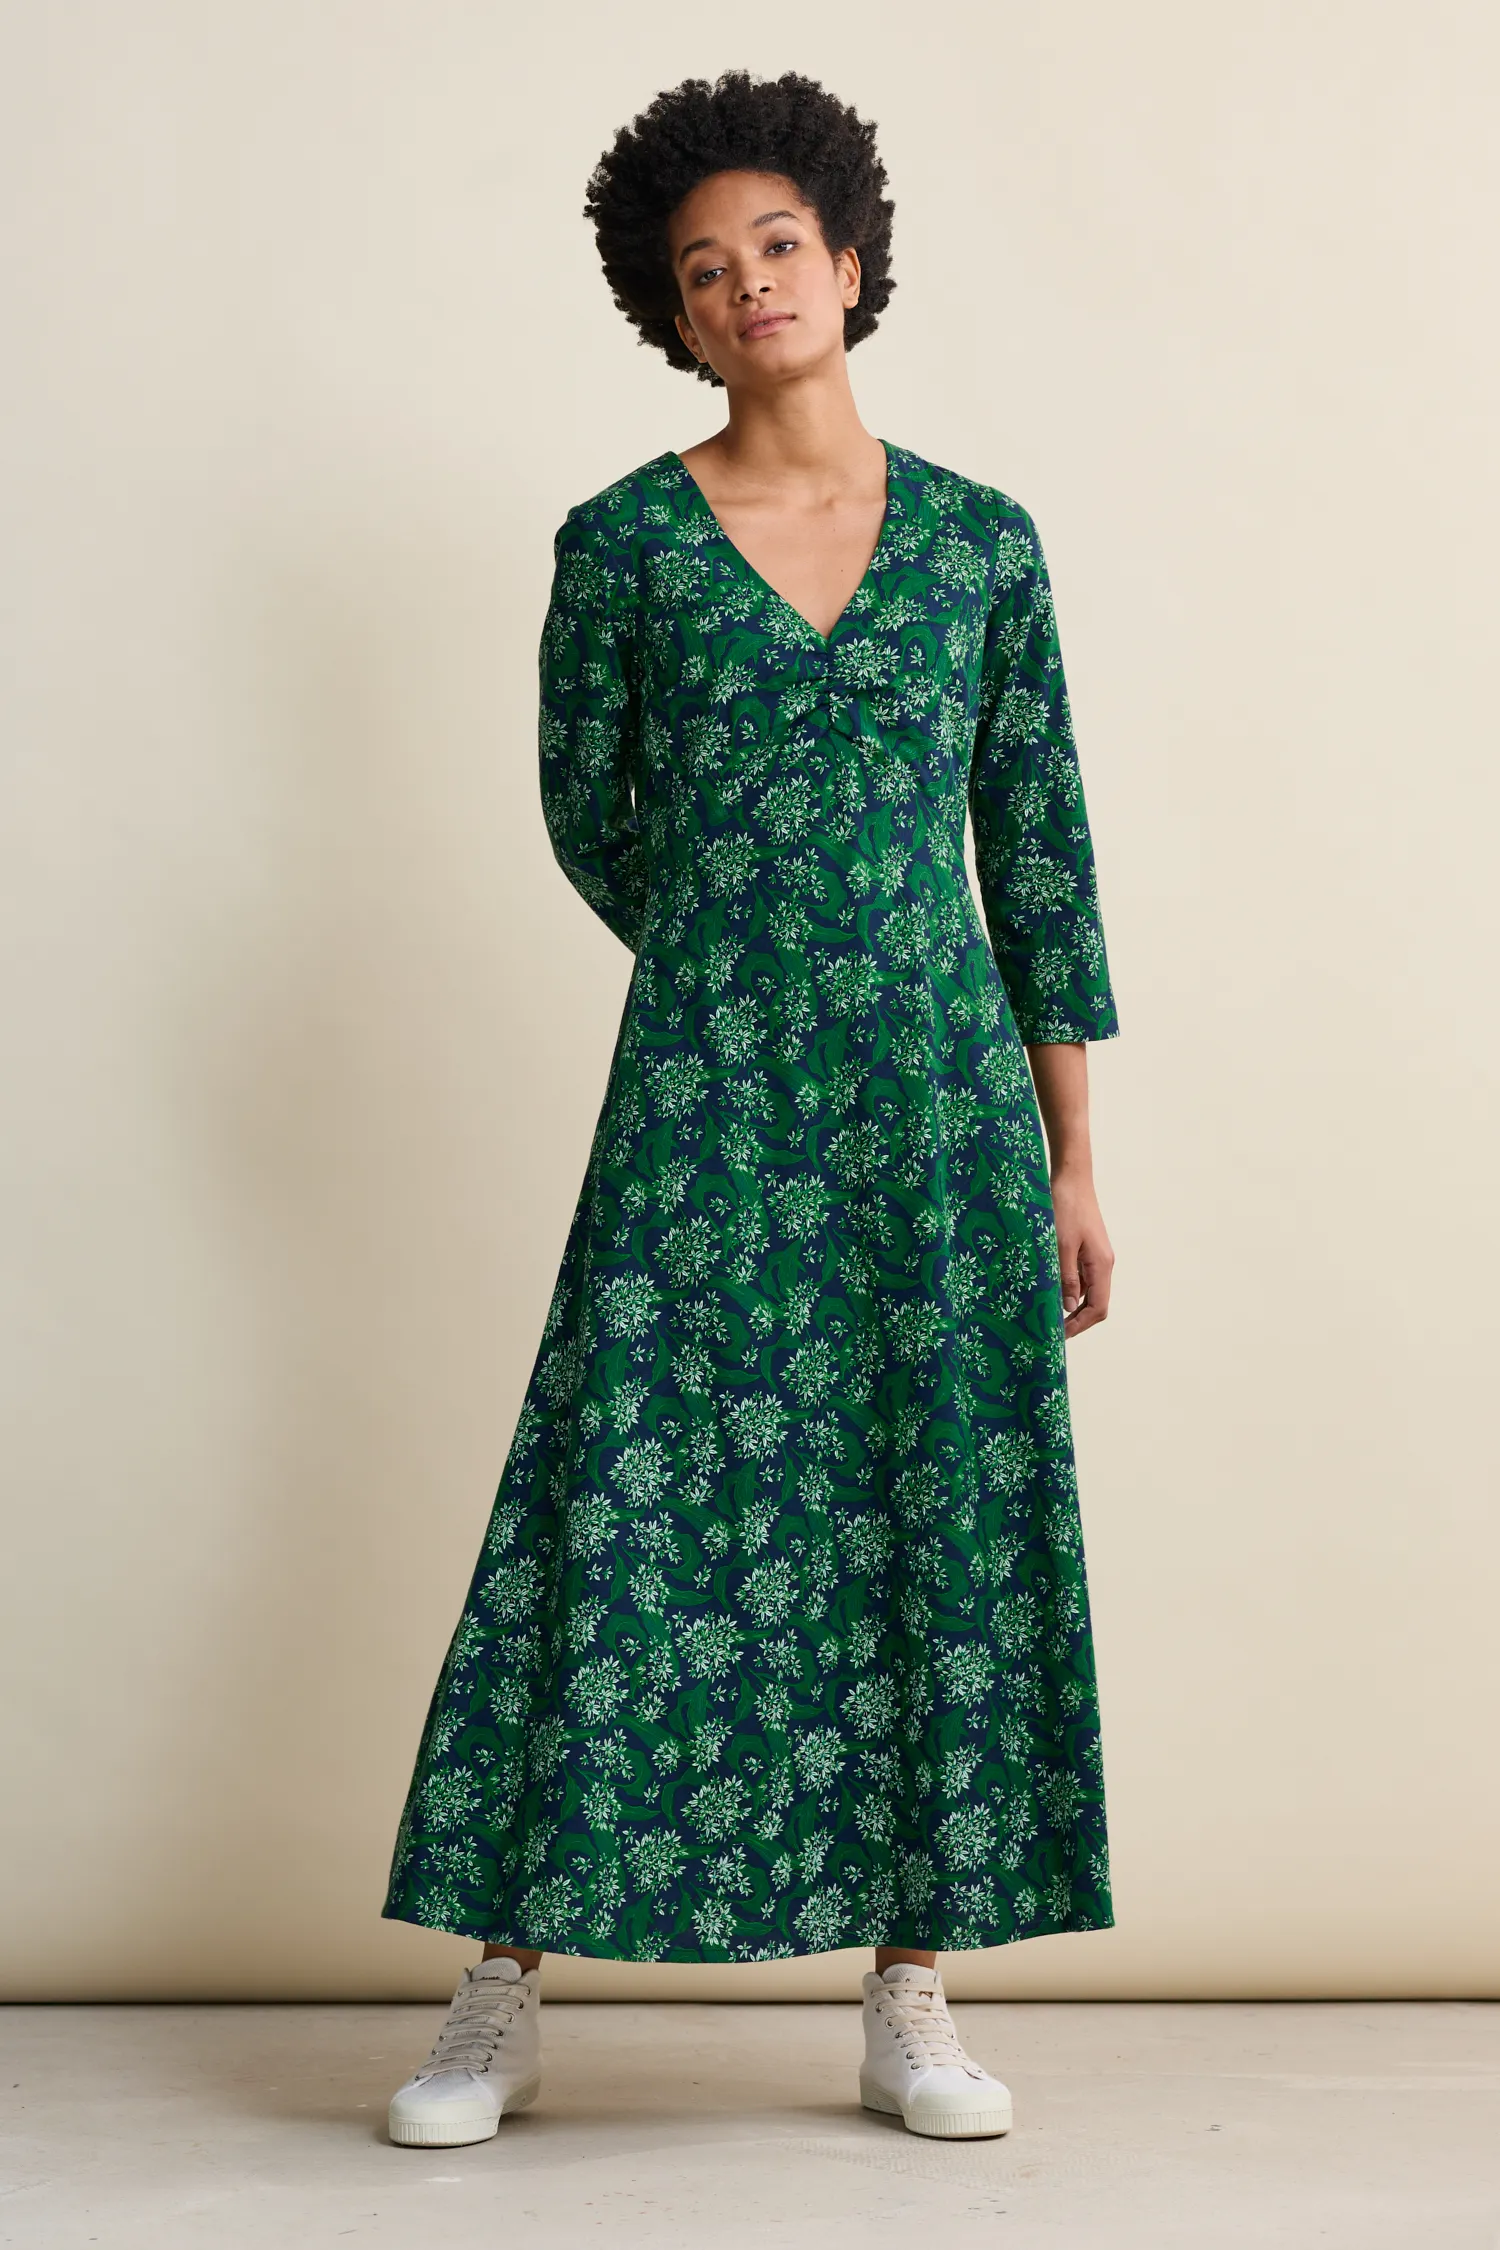 SEASALT CORNWALL Kleid Willow Blossom Dress, Muster: Woodland Garlic Maritime, Bärlauch Kleid